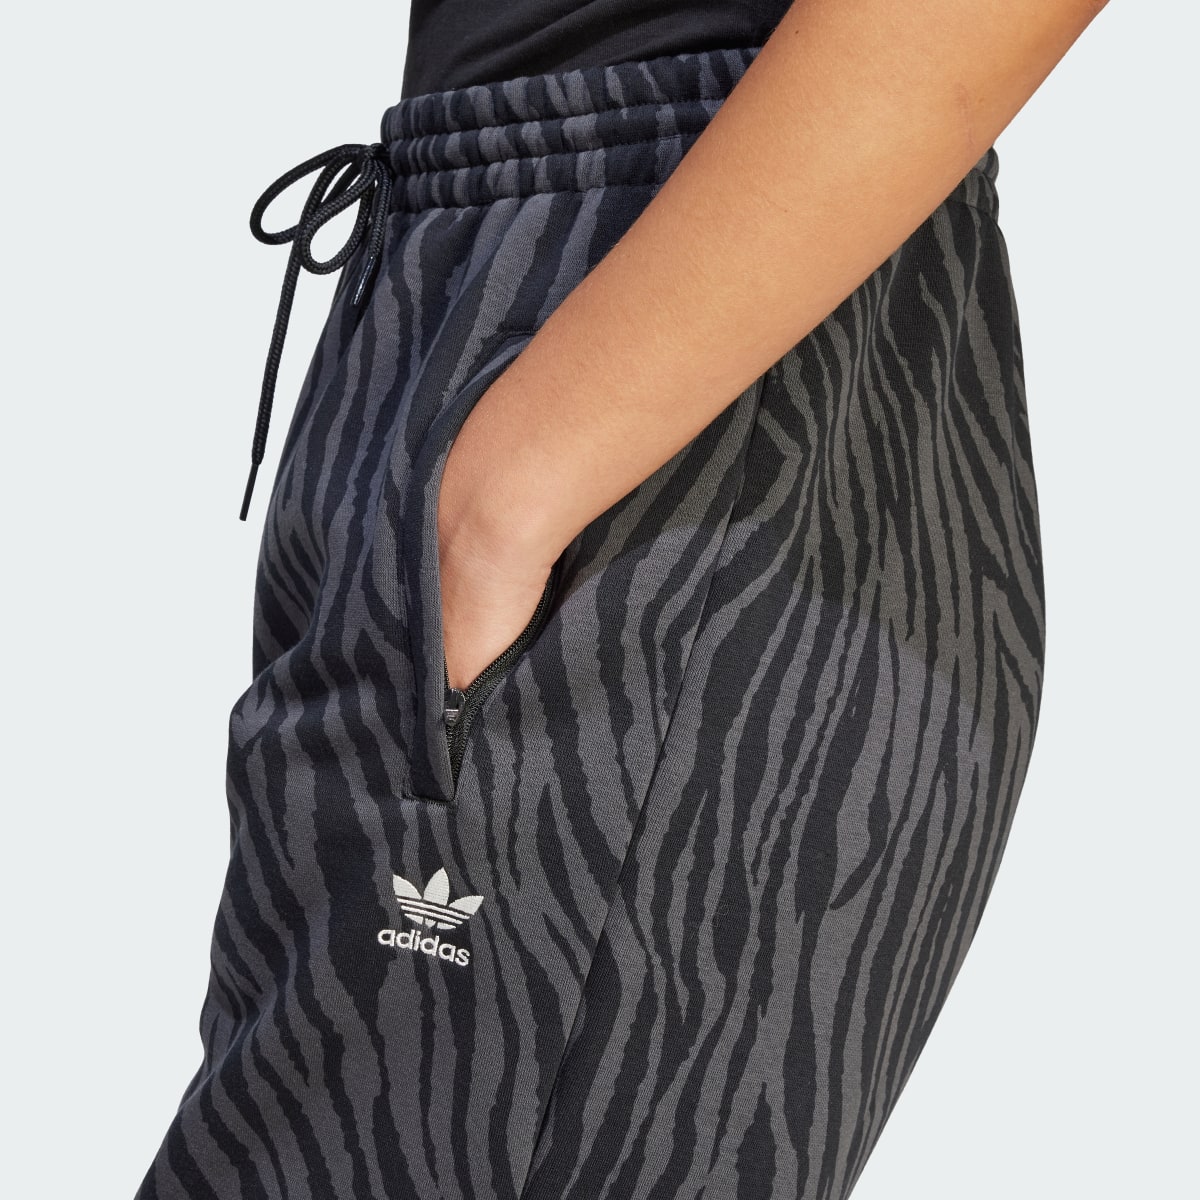 Adidas Pantaloni Allover Zebra Animal Print Essentials Joggers. 5